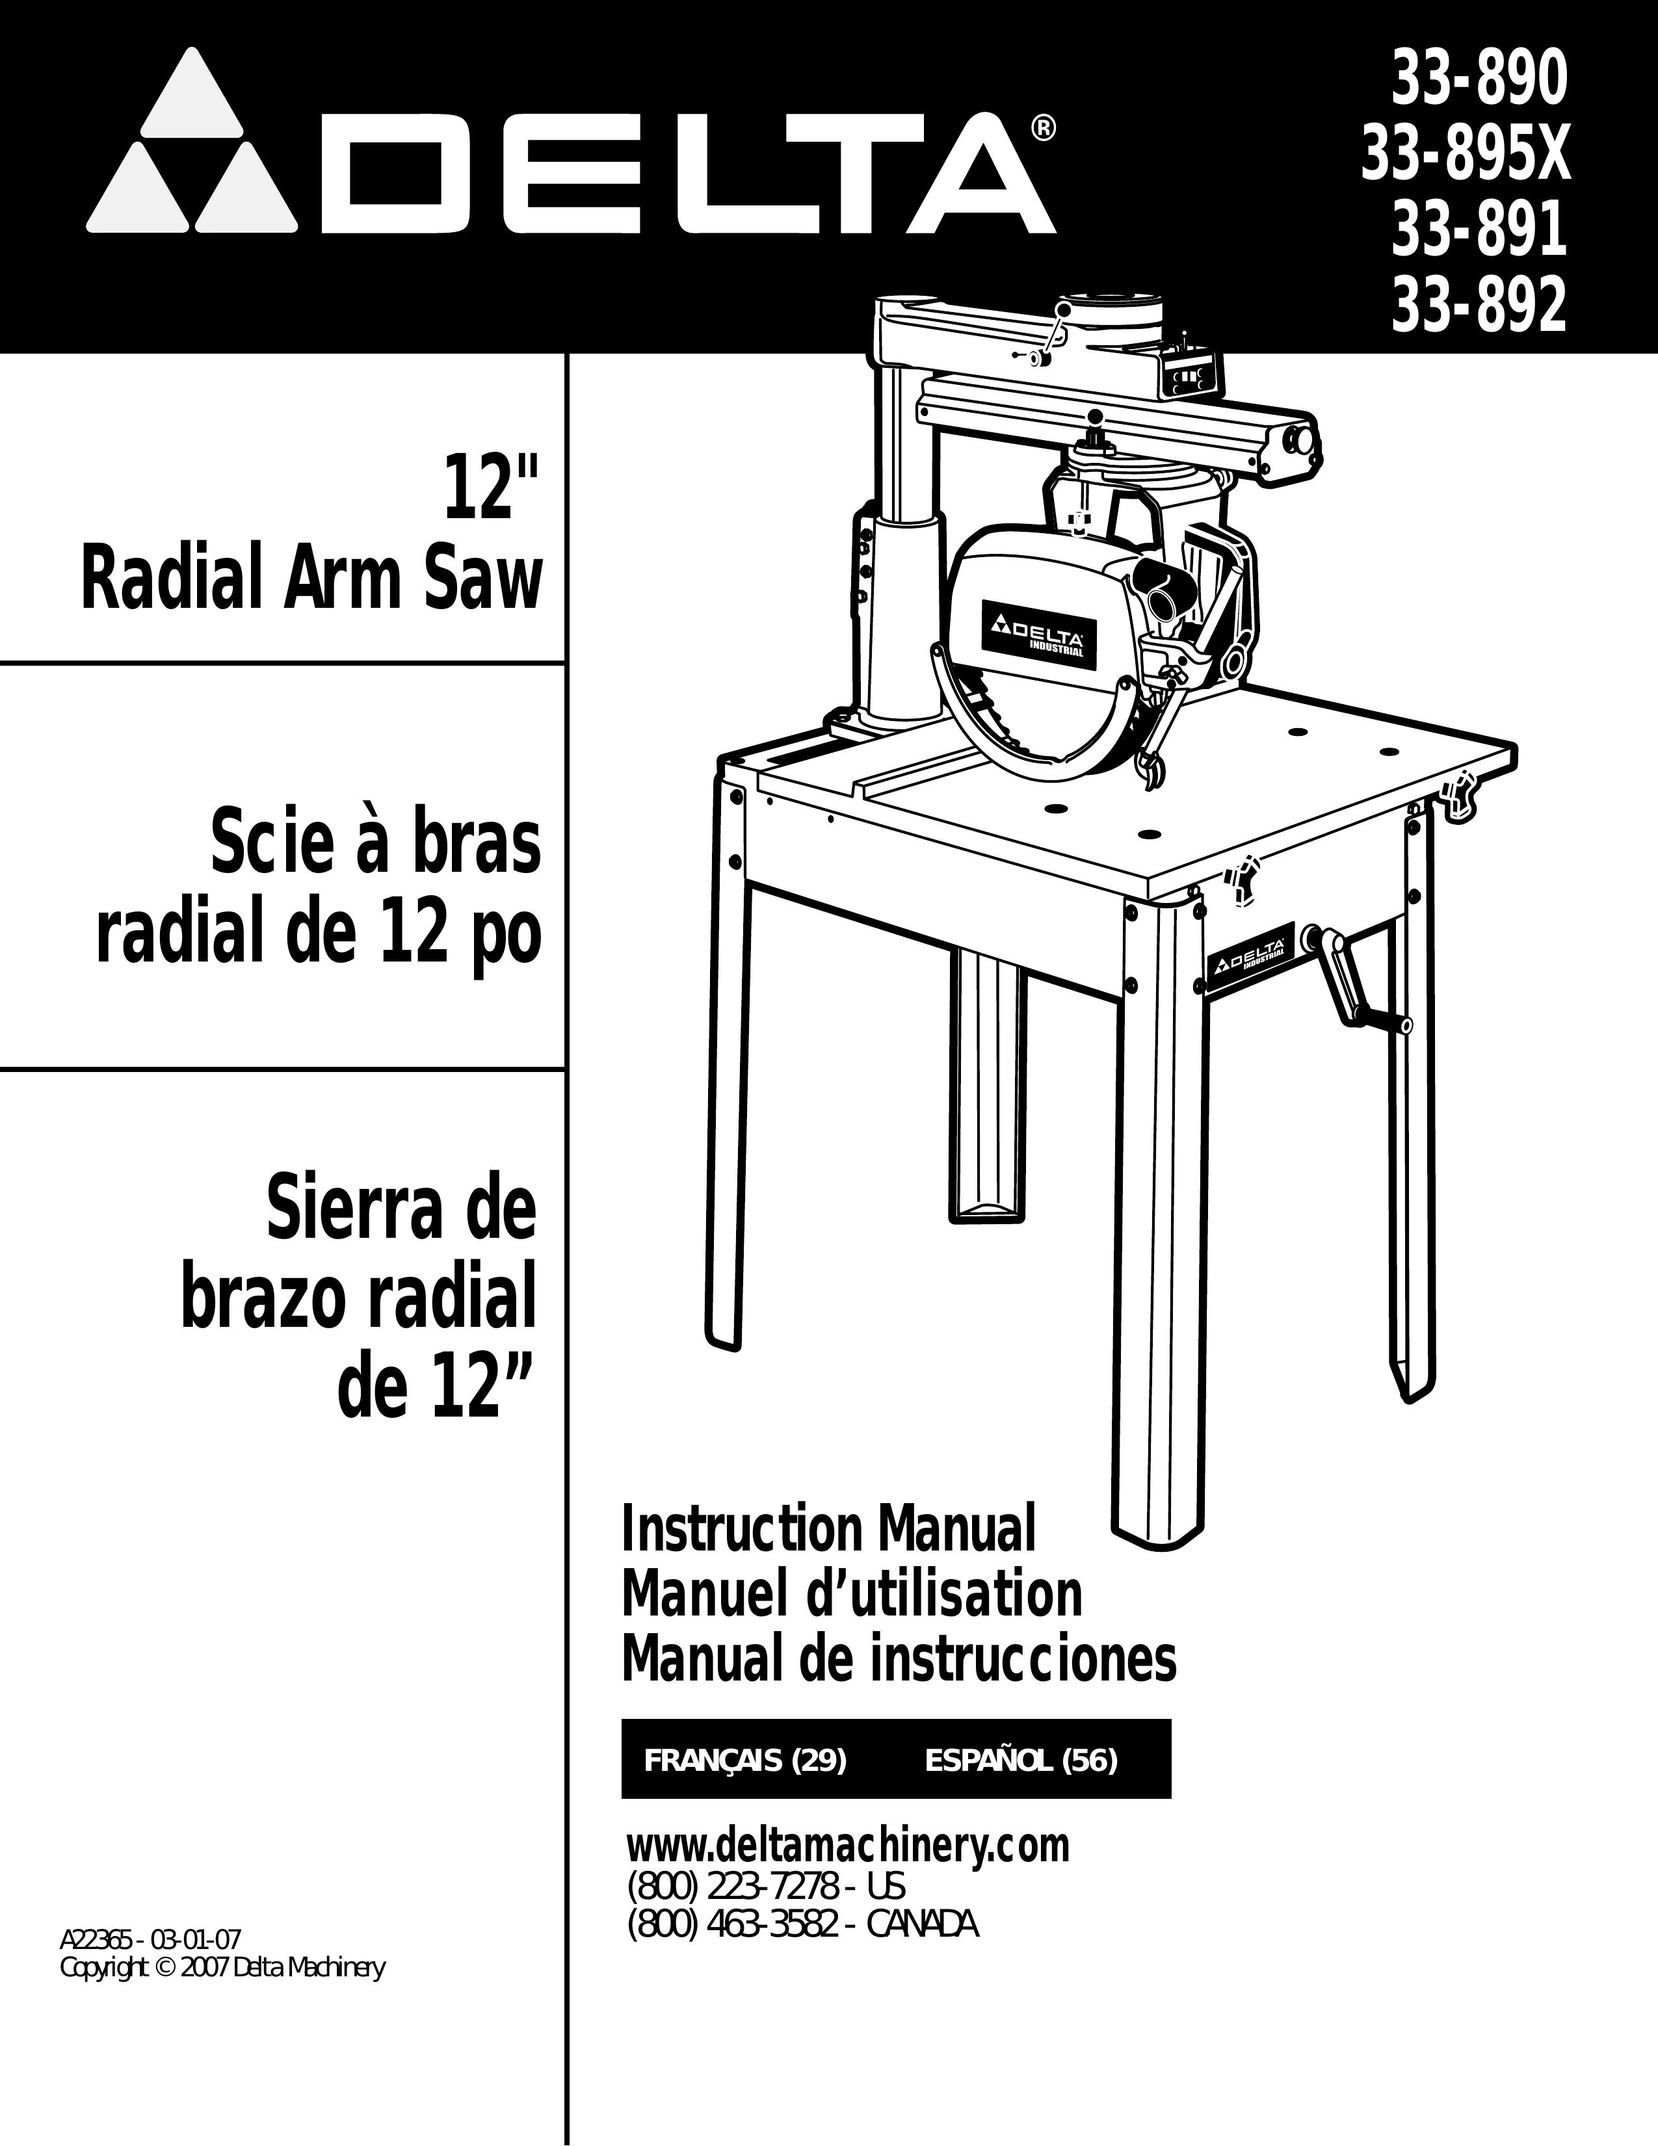 Delta 33-890 Saw User Manual